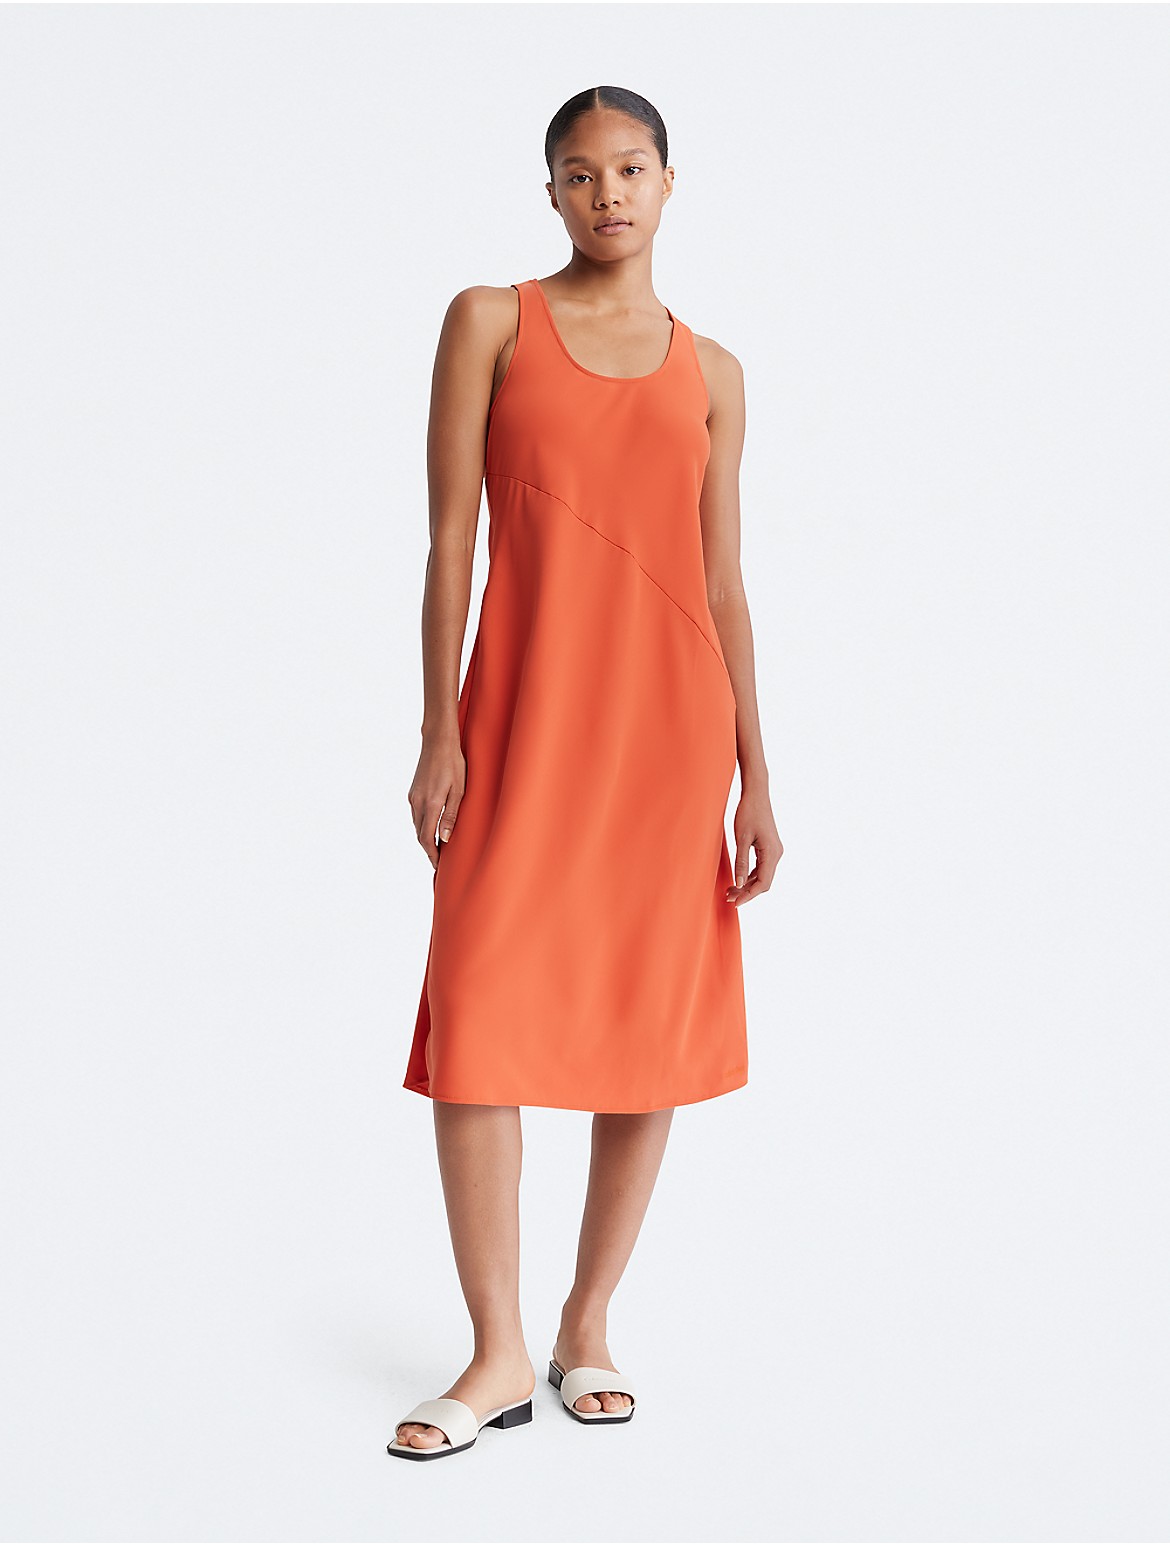 Calvin Klein Women's Scoopneck Midi Tank Dress - Orange - M